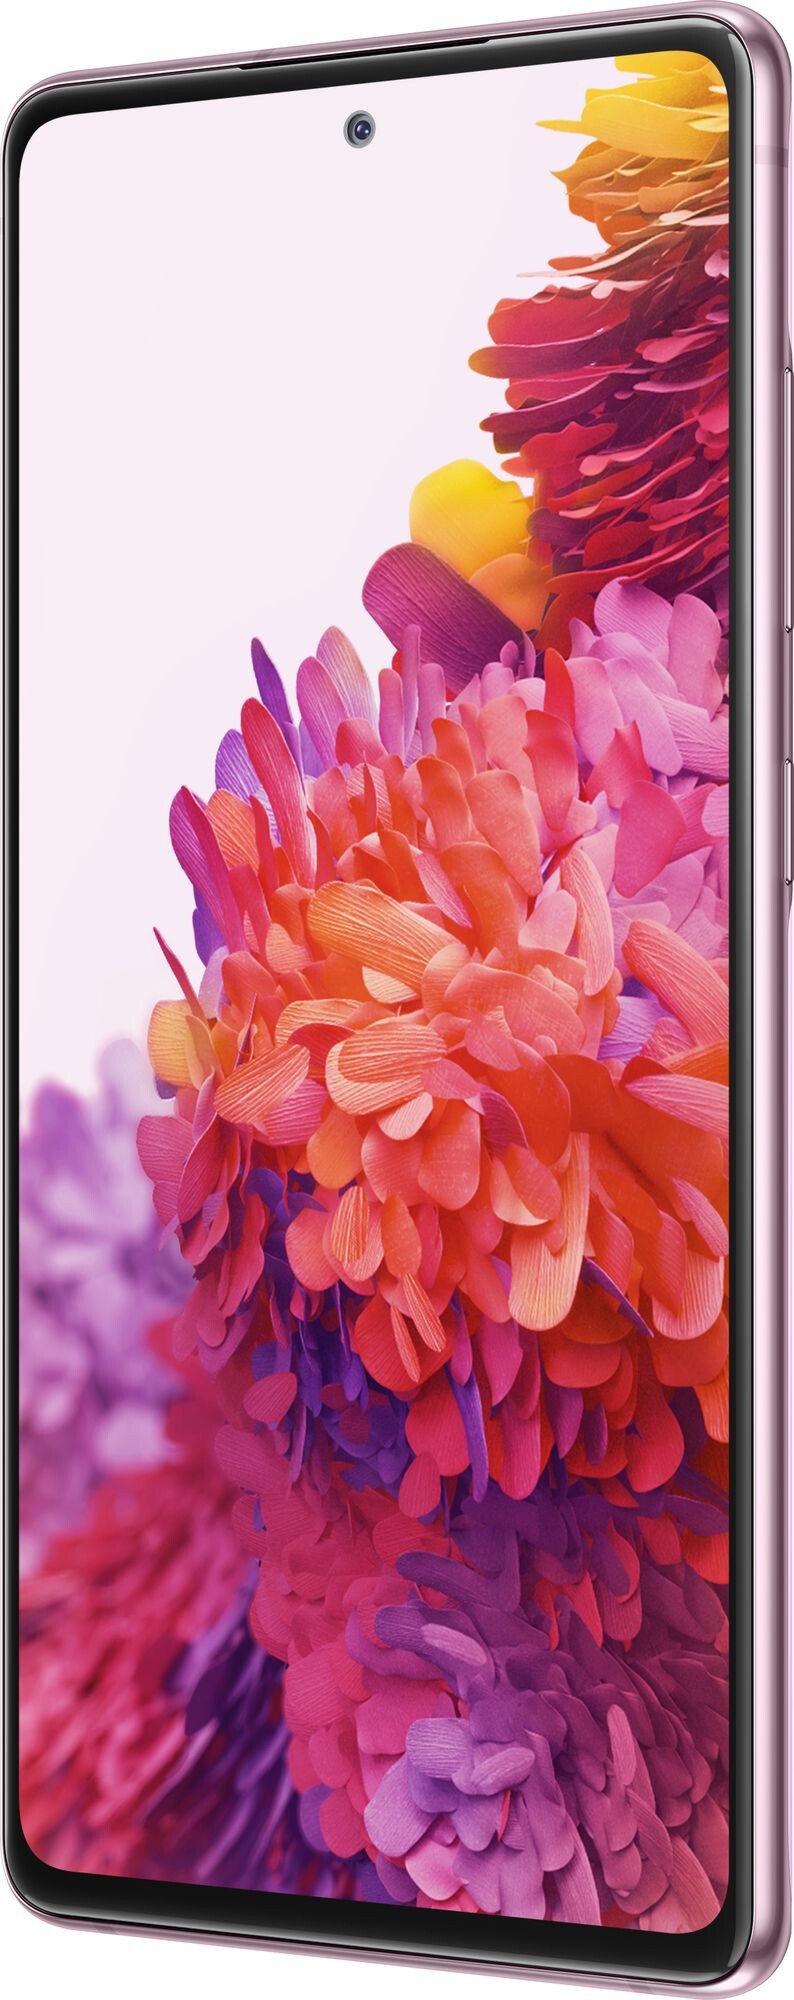 Смартфон Samsung Galaxy S20FE (SM-G780G) 6/128GB (ЕАС) Cloud Lavender (Лавандовый)